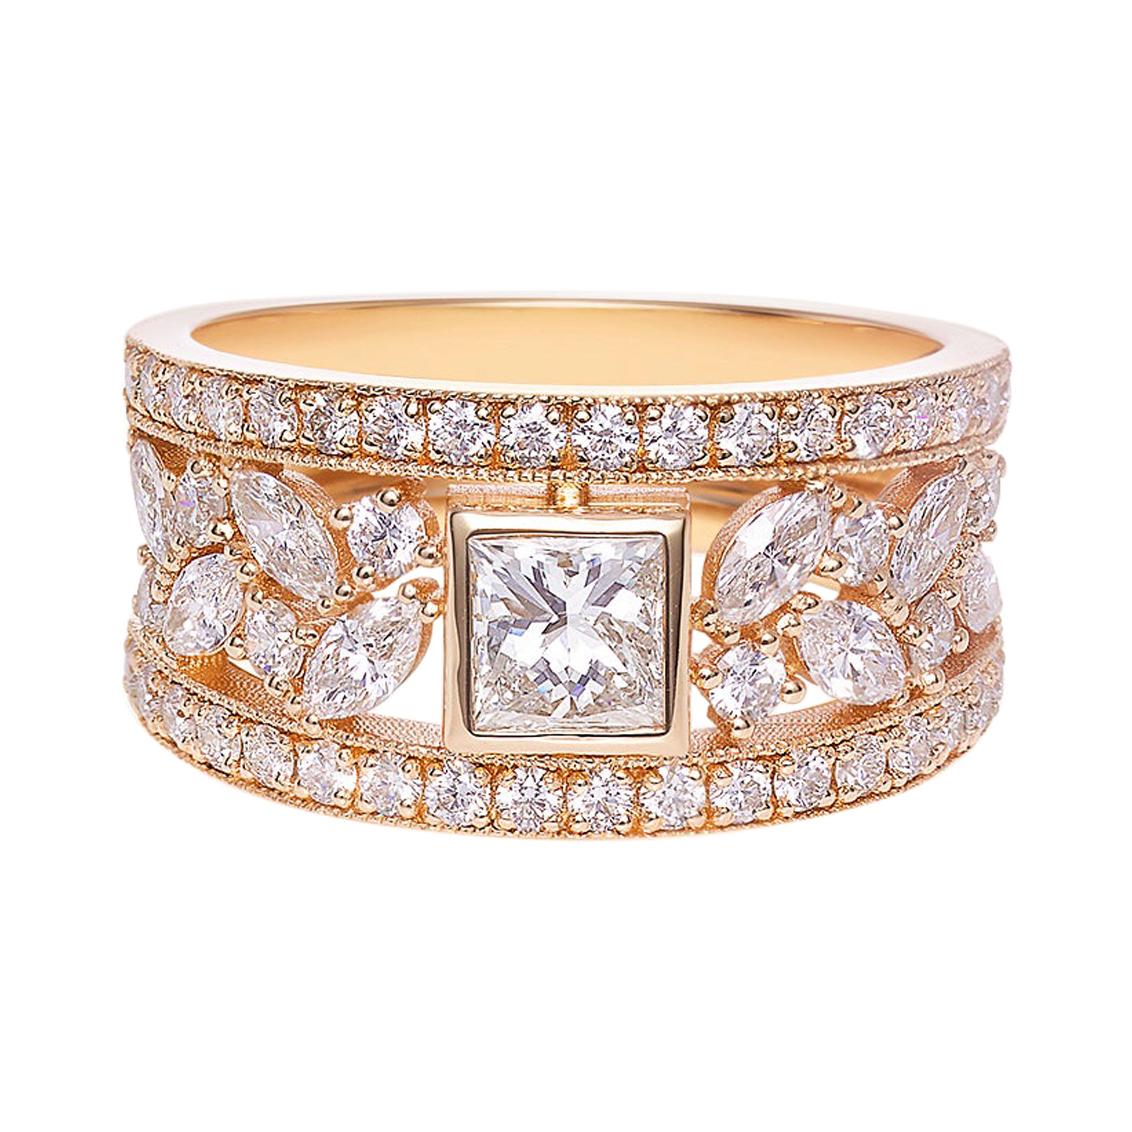 Princess Cut Diamond, Marquise Cut Diamond Unique Ring 18K Yellow Gold